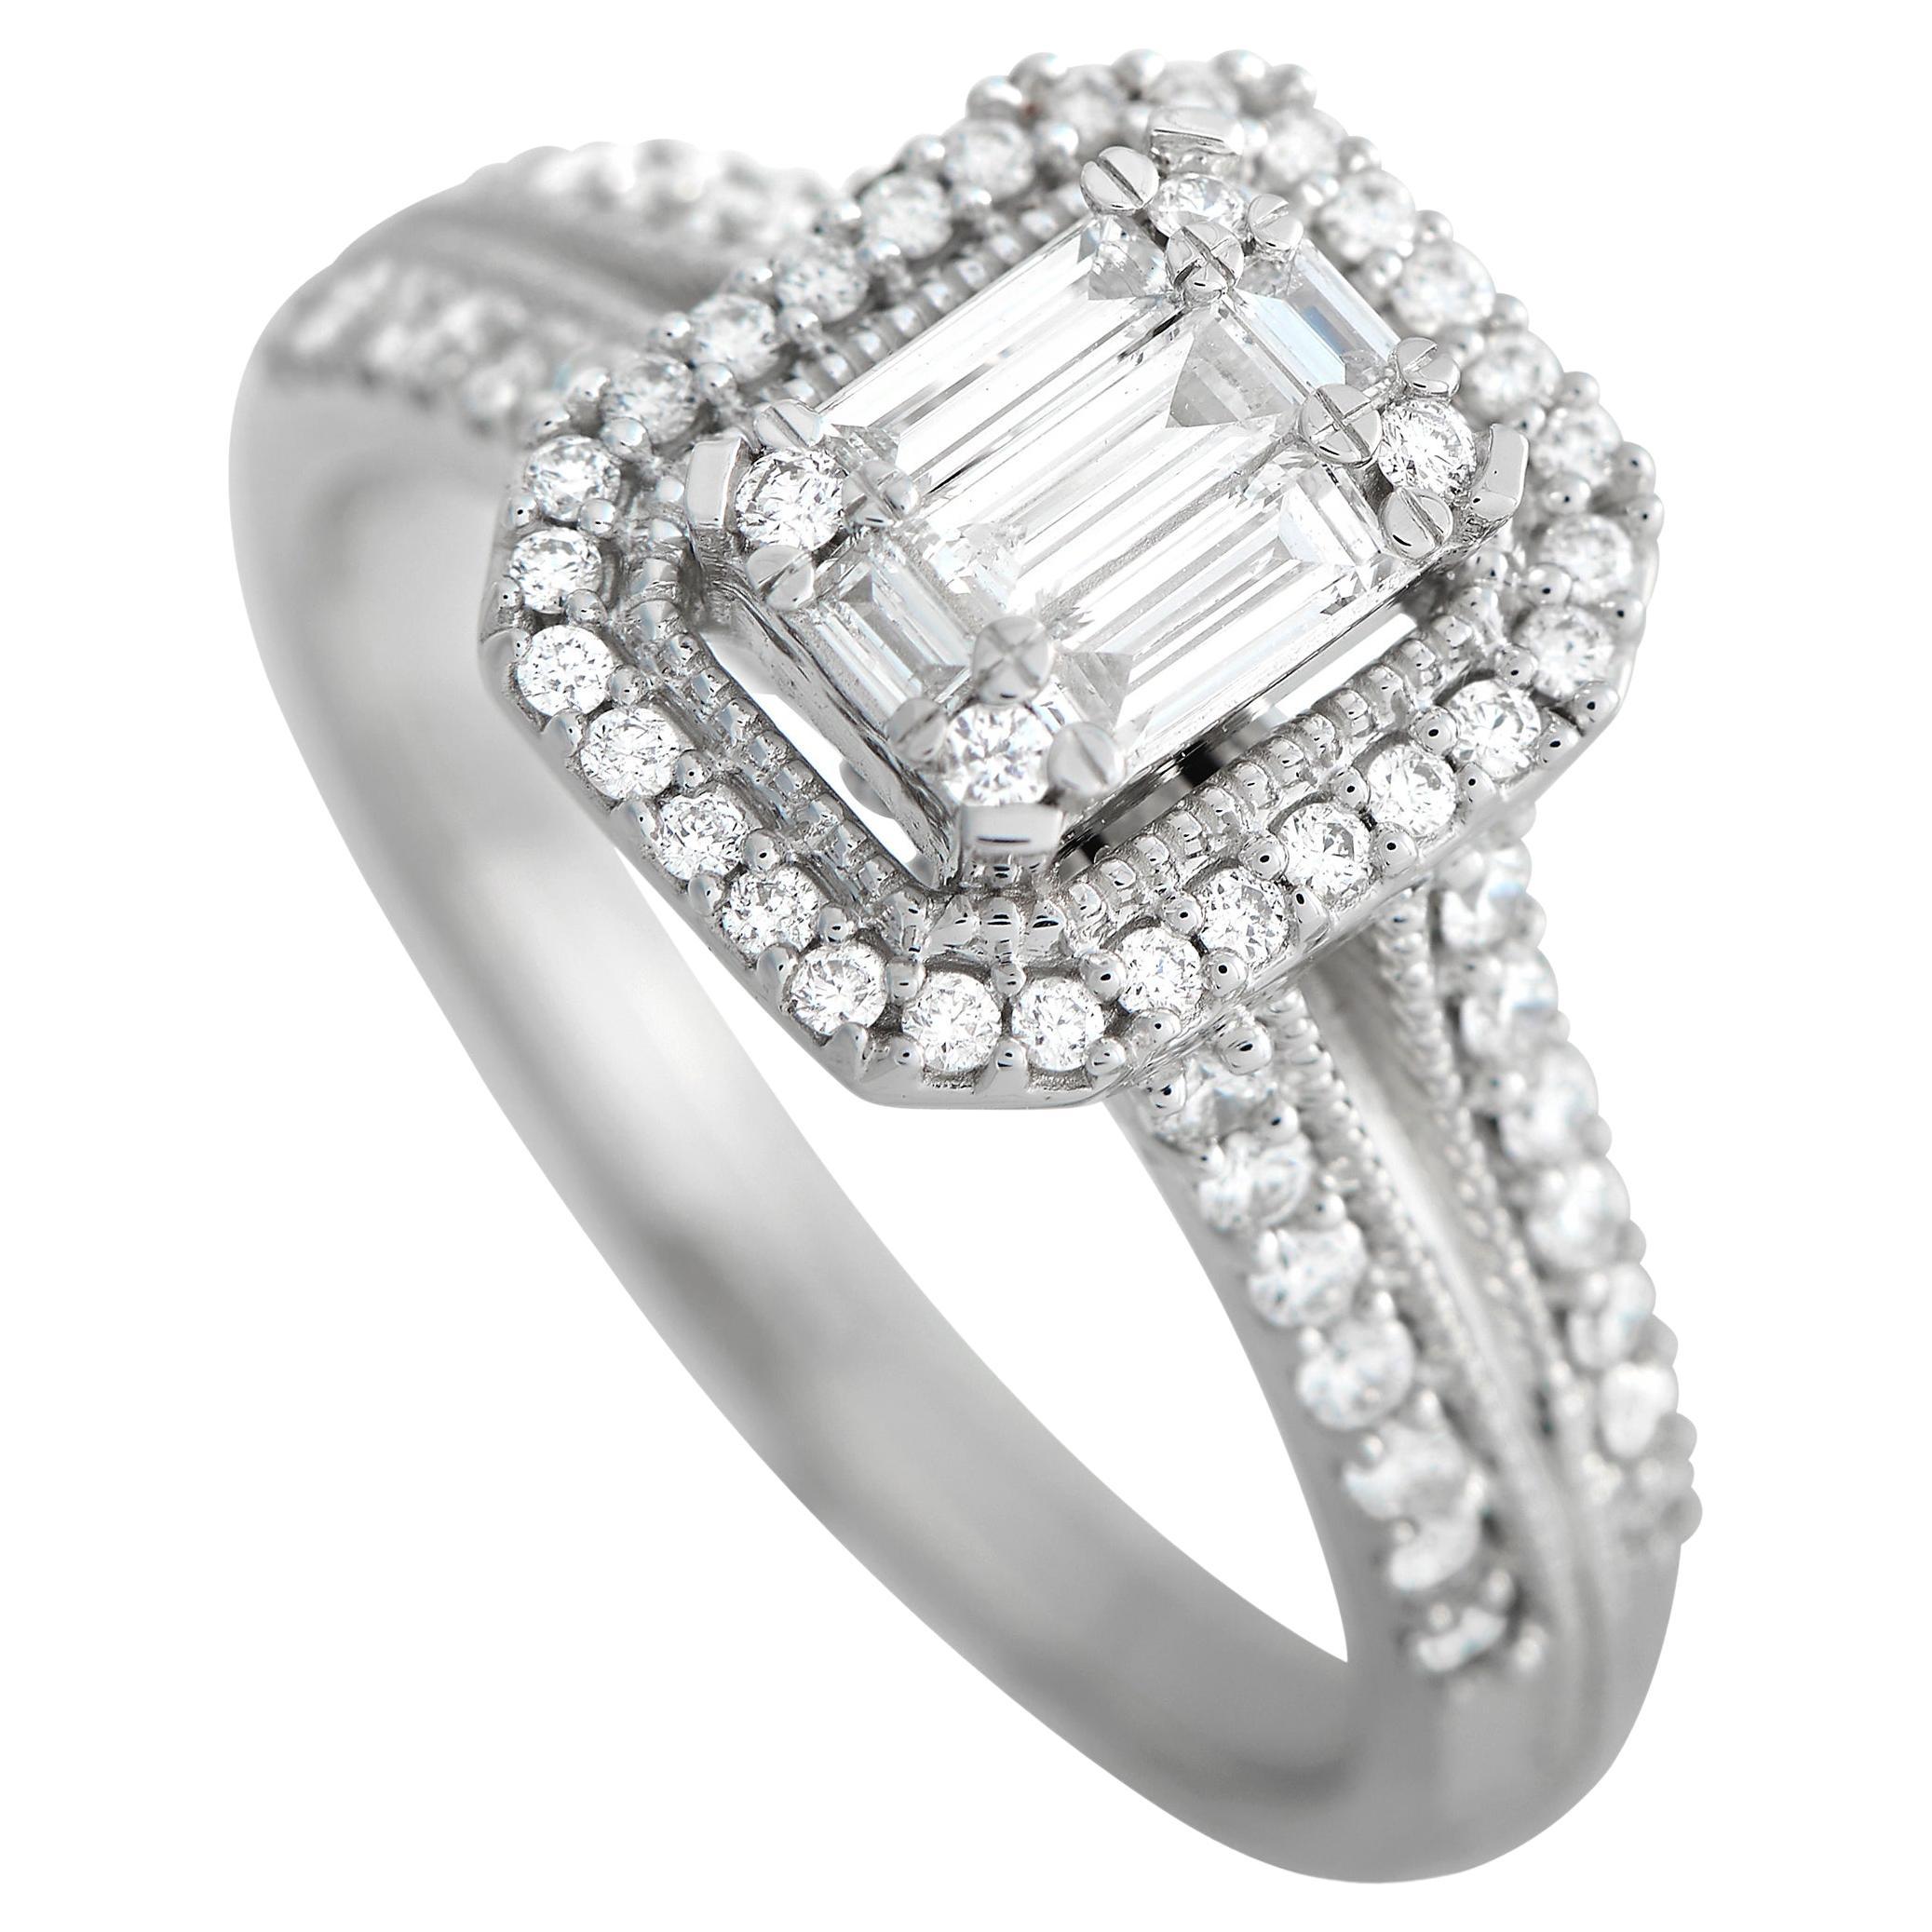 LB Exclusive 14k White Gold 0.60 Carat Diamond Ring